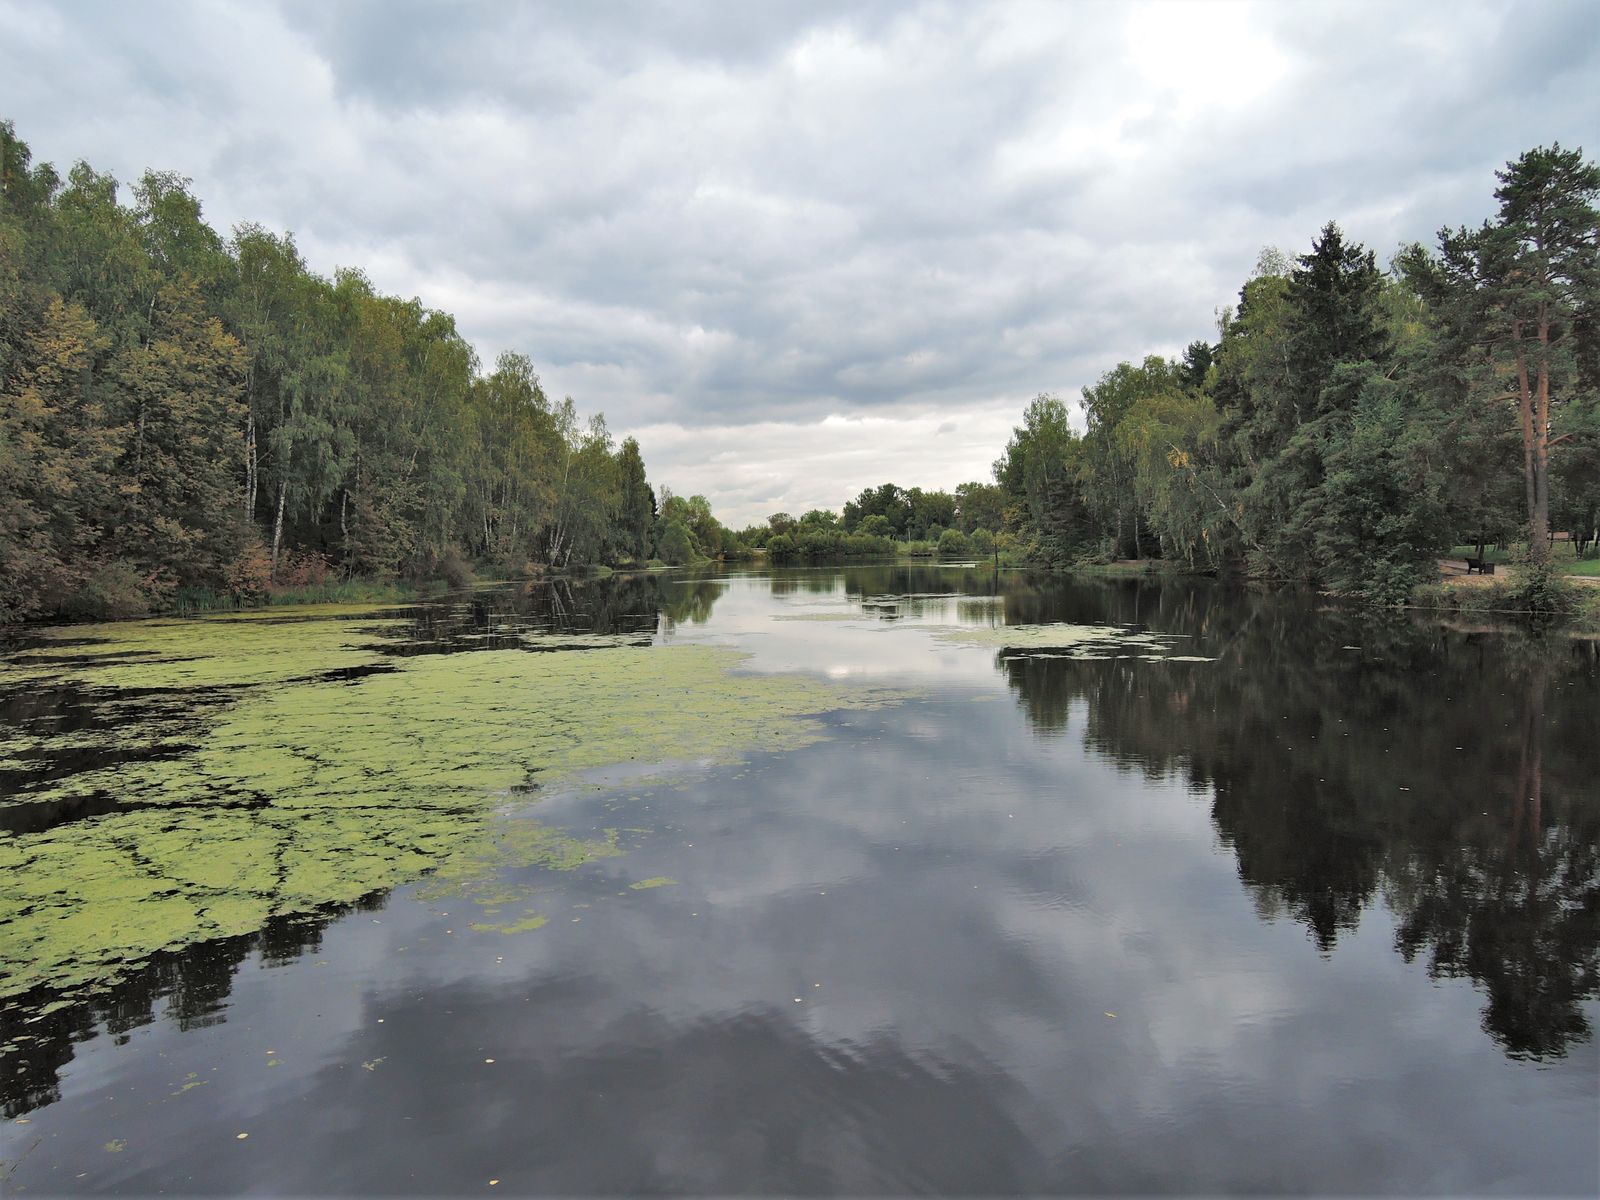 Захарово, image of landscape/habitat.